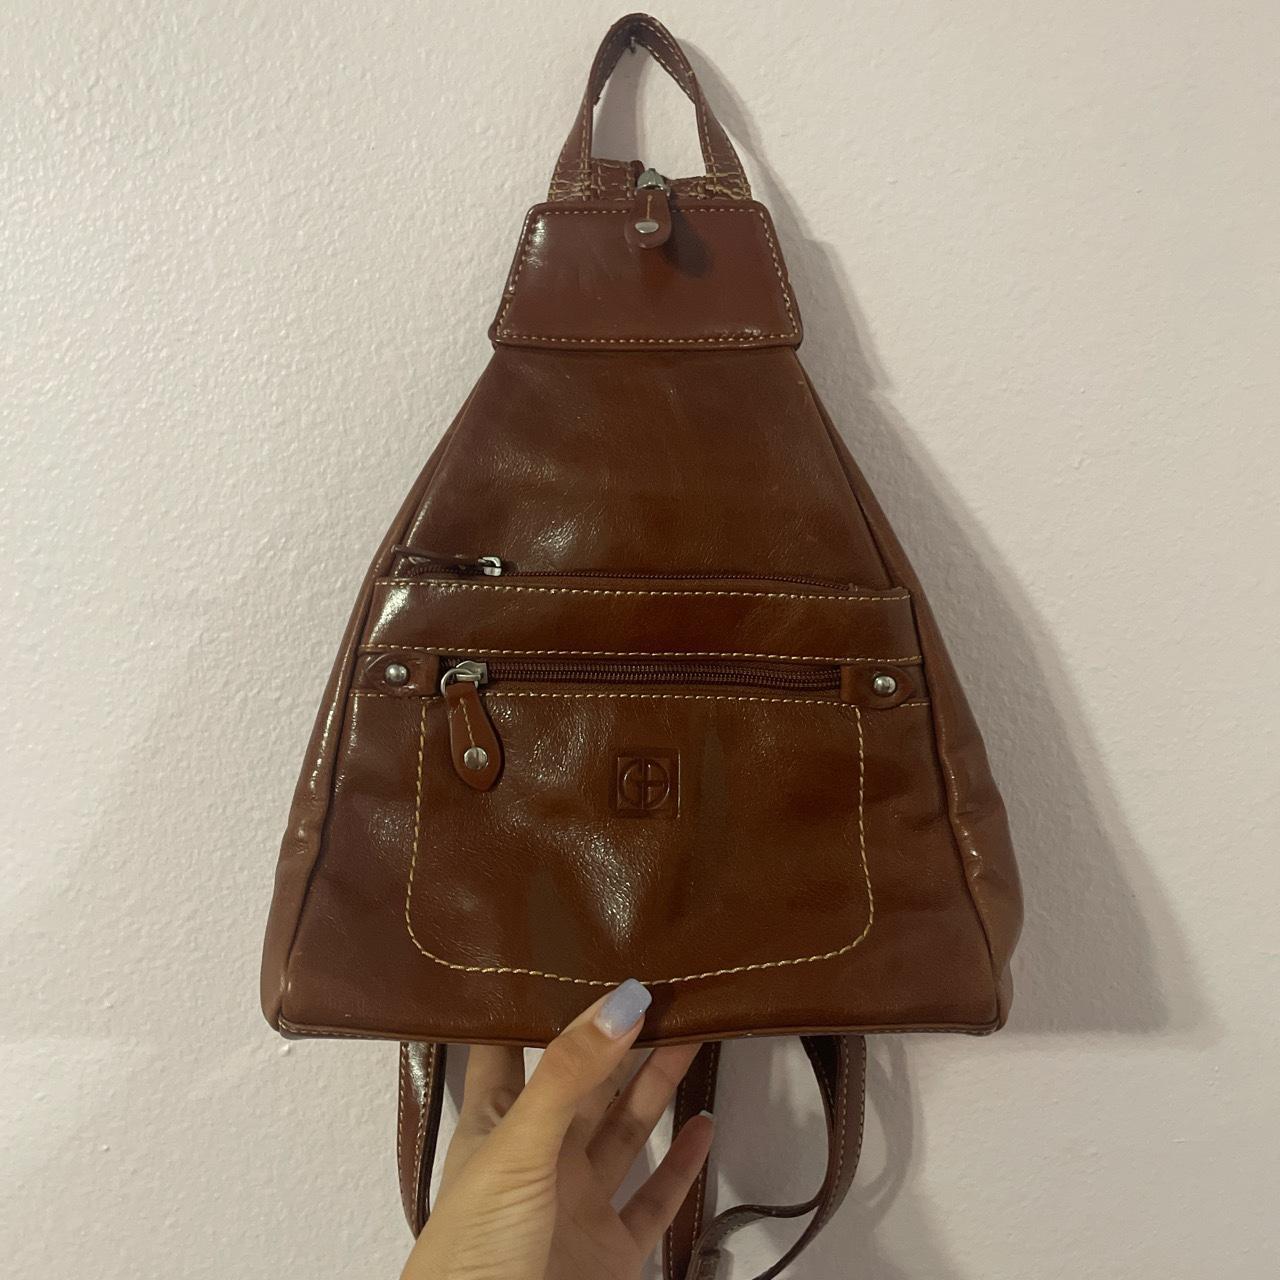 Giani Bernini Brown Leather Purse Handbag Shoulder Bag 